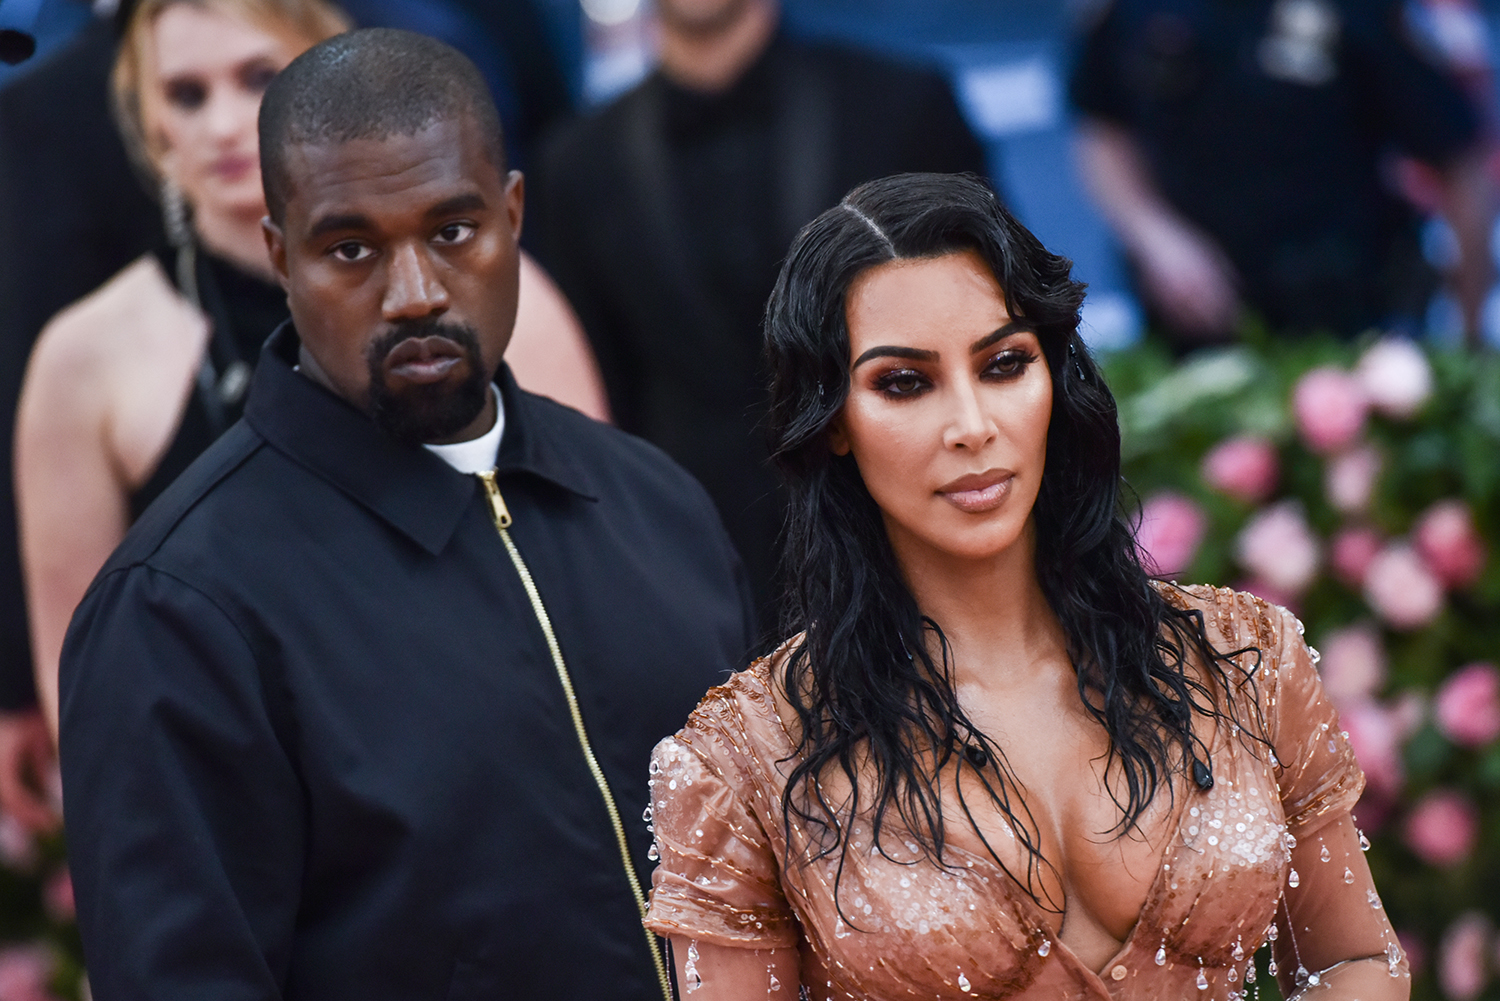 Kanye West and Kim Kardashian West at the Met Gala in 2019. Image: Anthony Behar/SIPA USA/PA Images